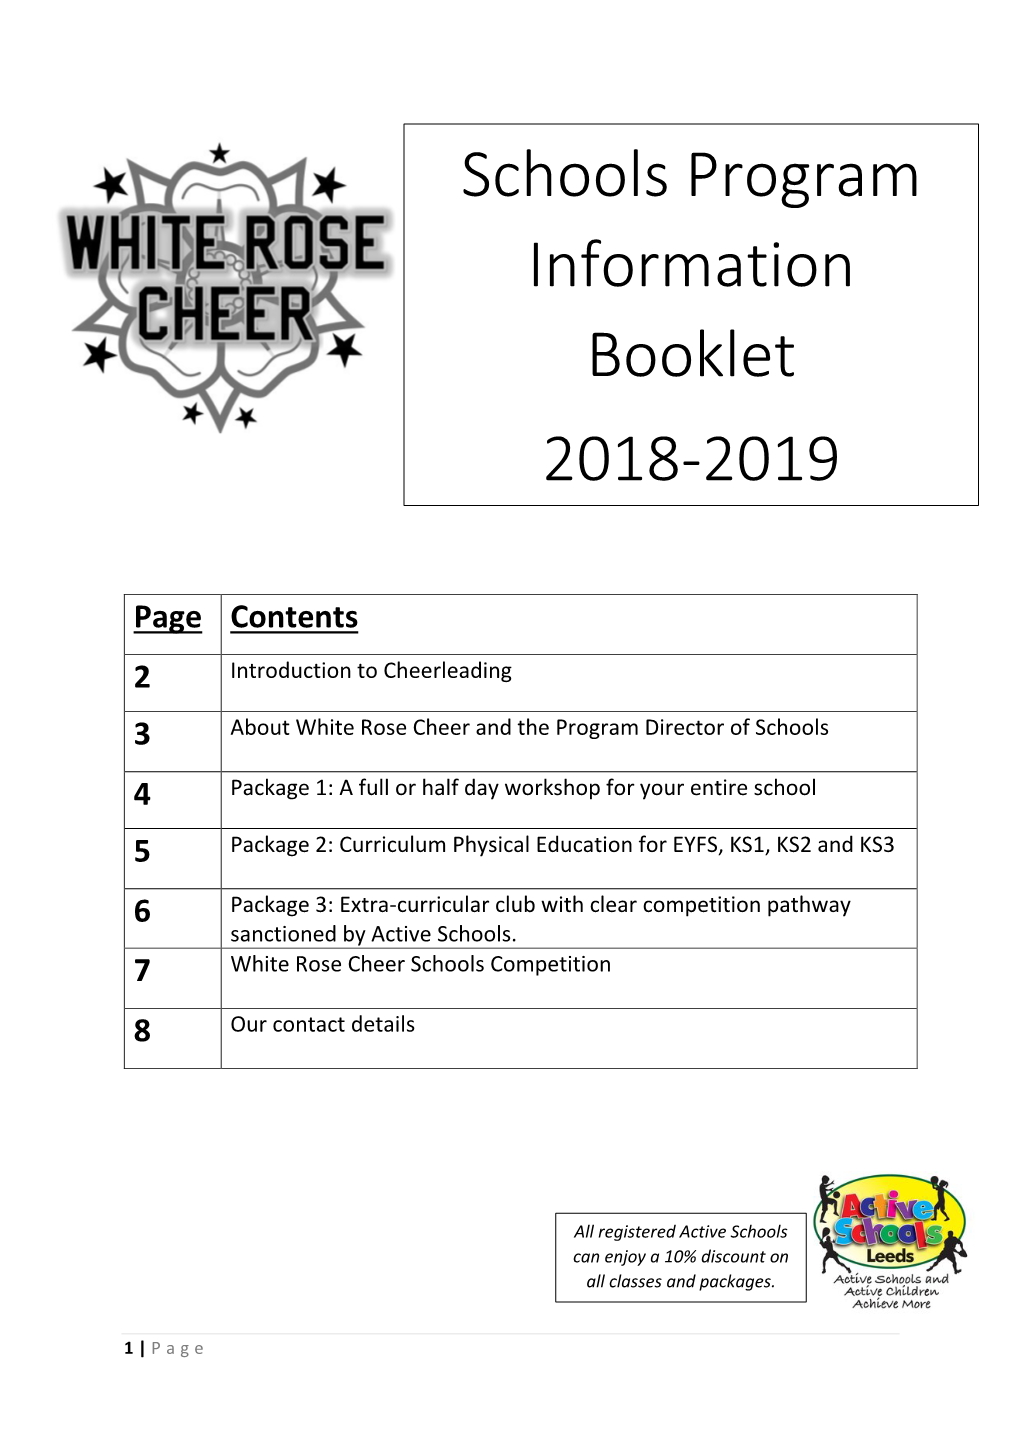 Schools Program Information Booklet 2018-2019